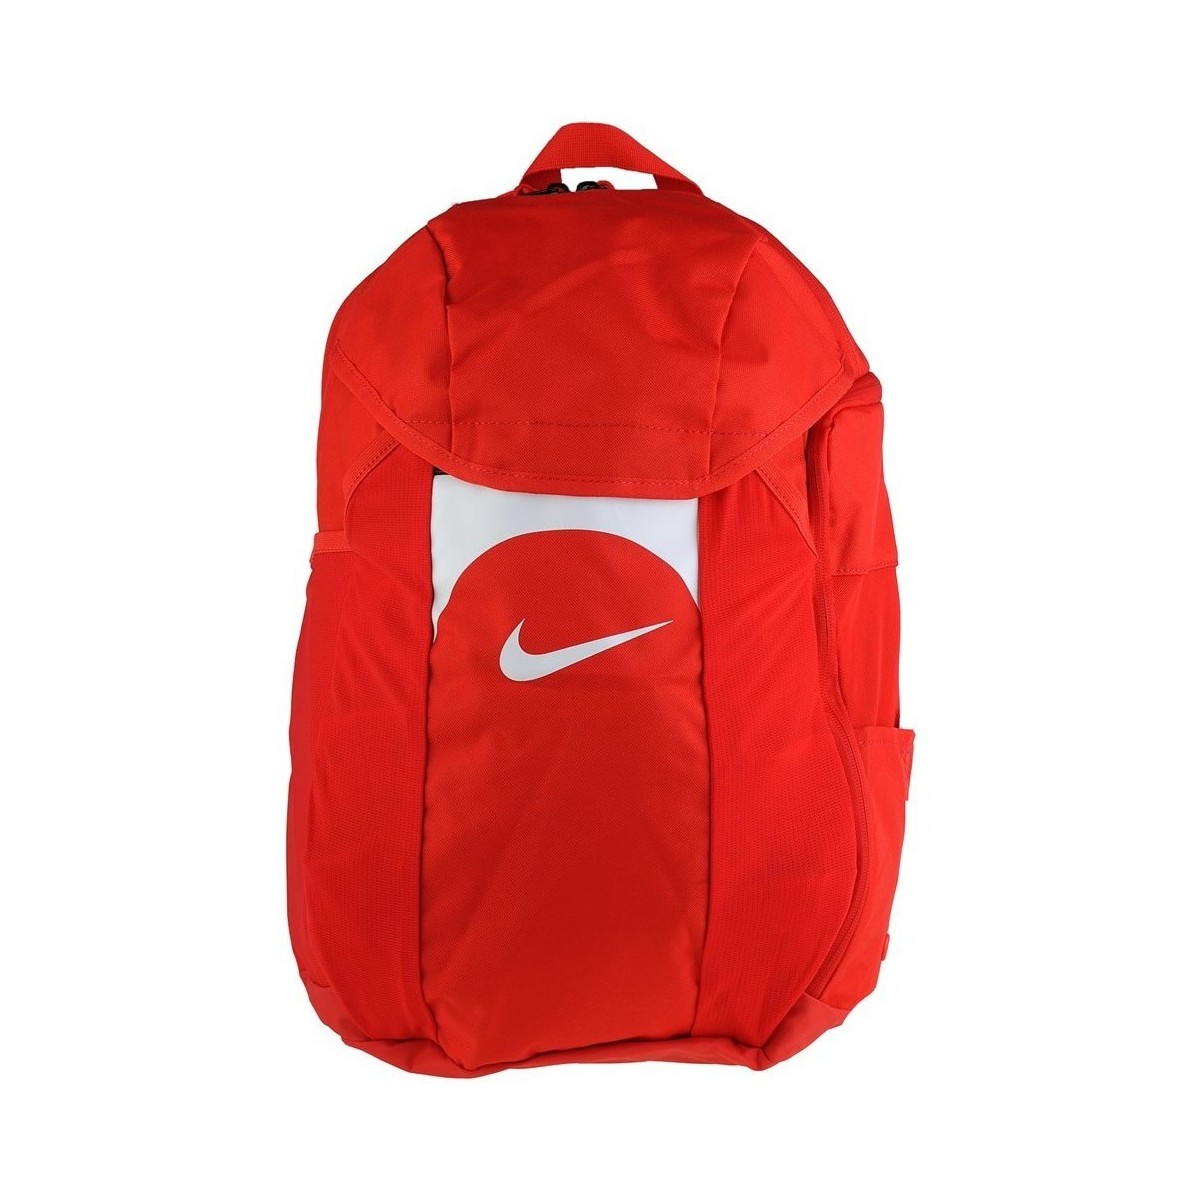 Taschen Rucksäcke Nike Academy Team Rot